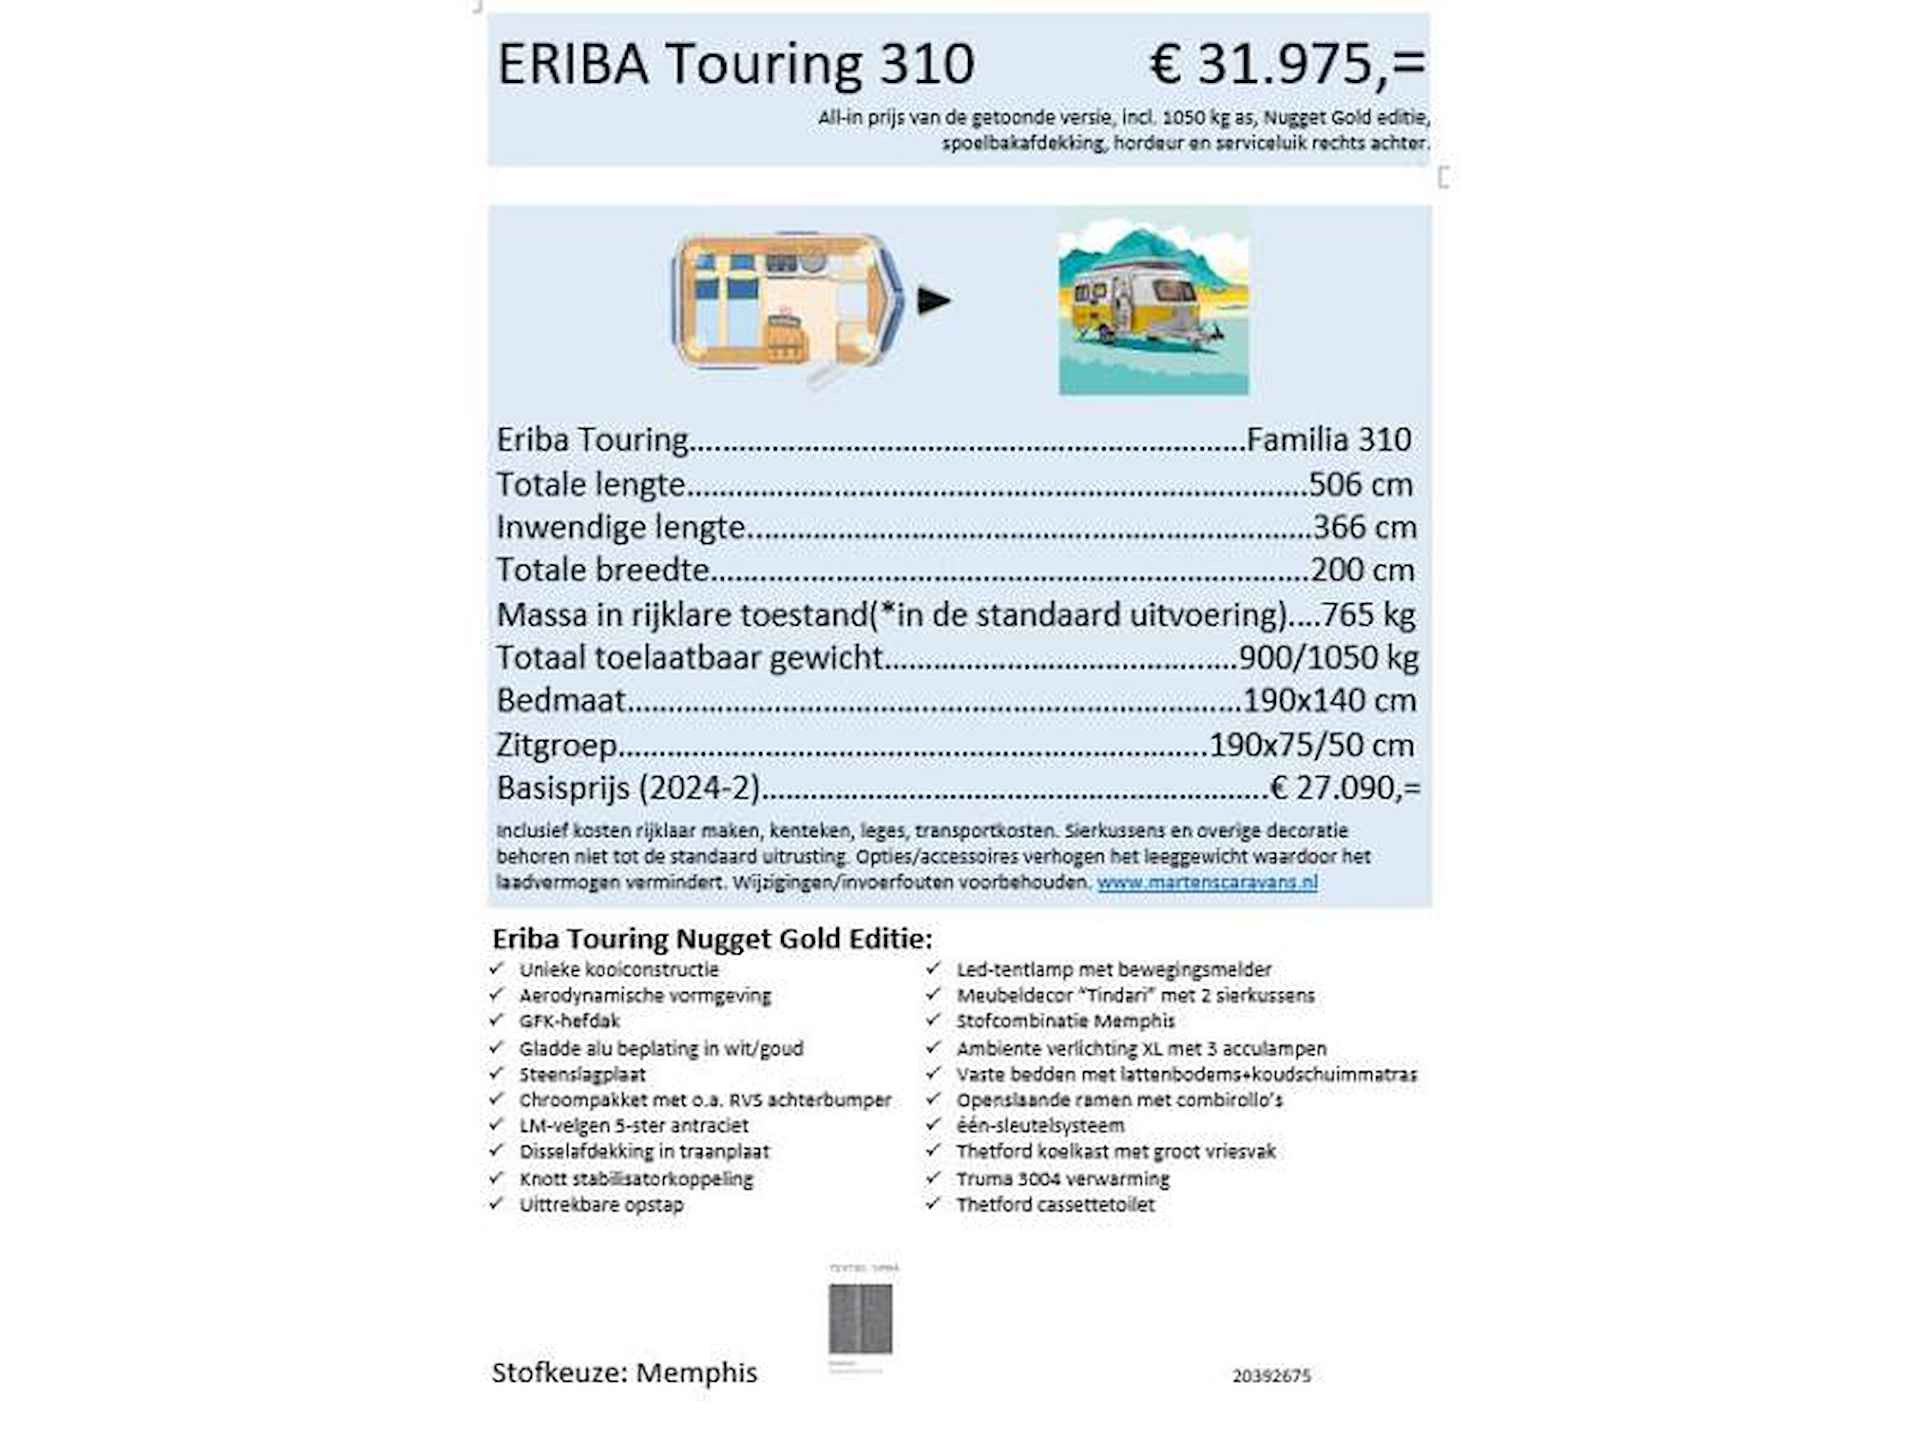 Eriba Touring 310 Nugget Gold - 20/20